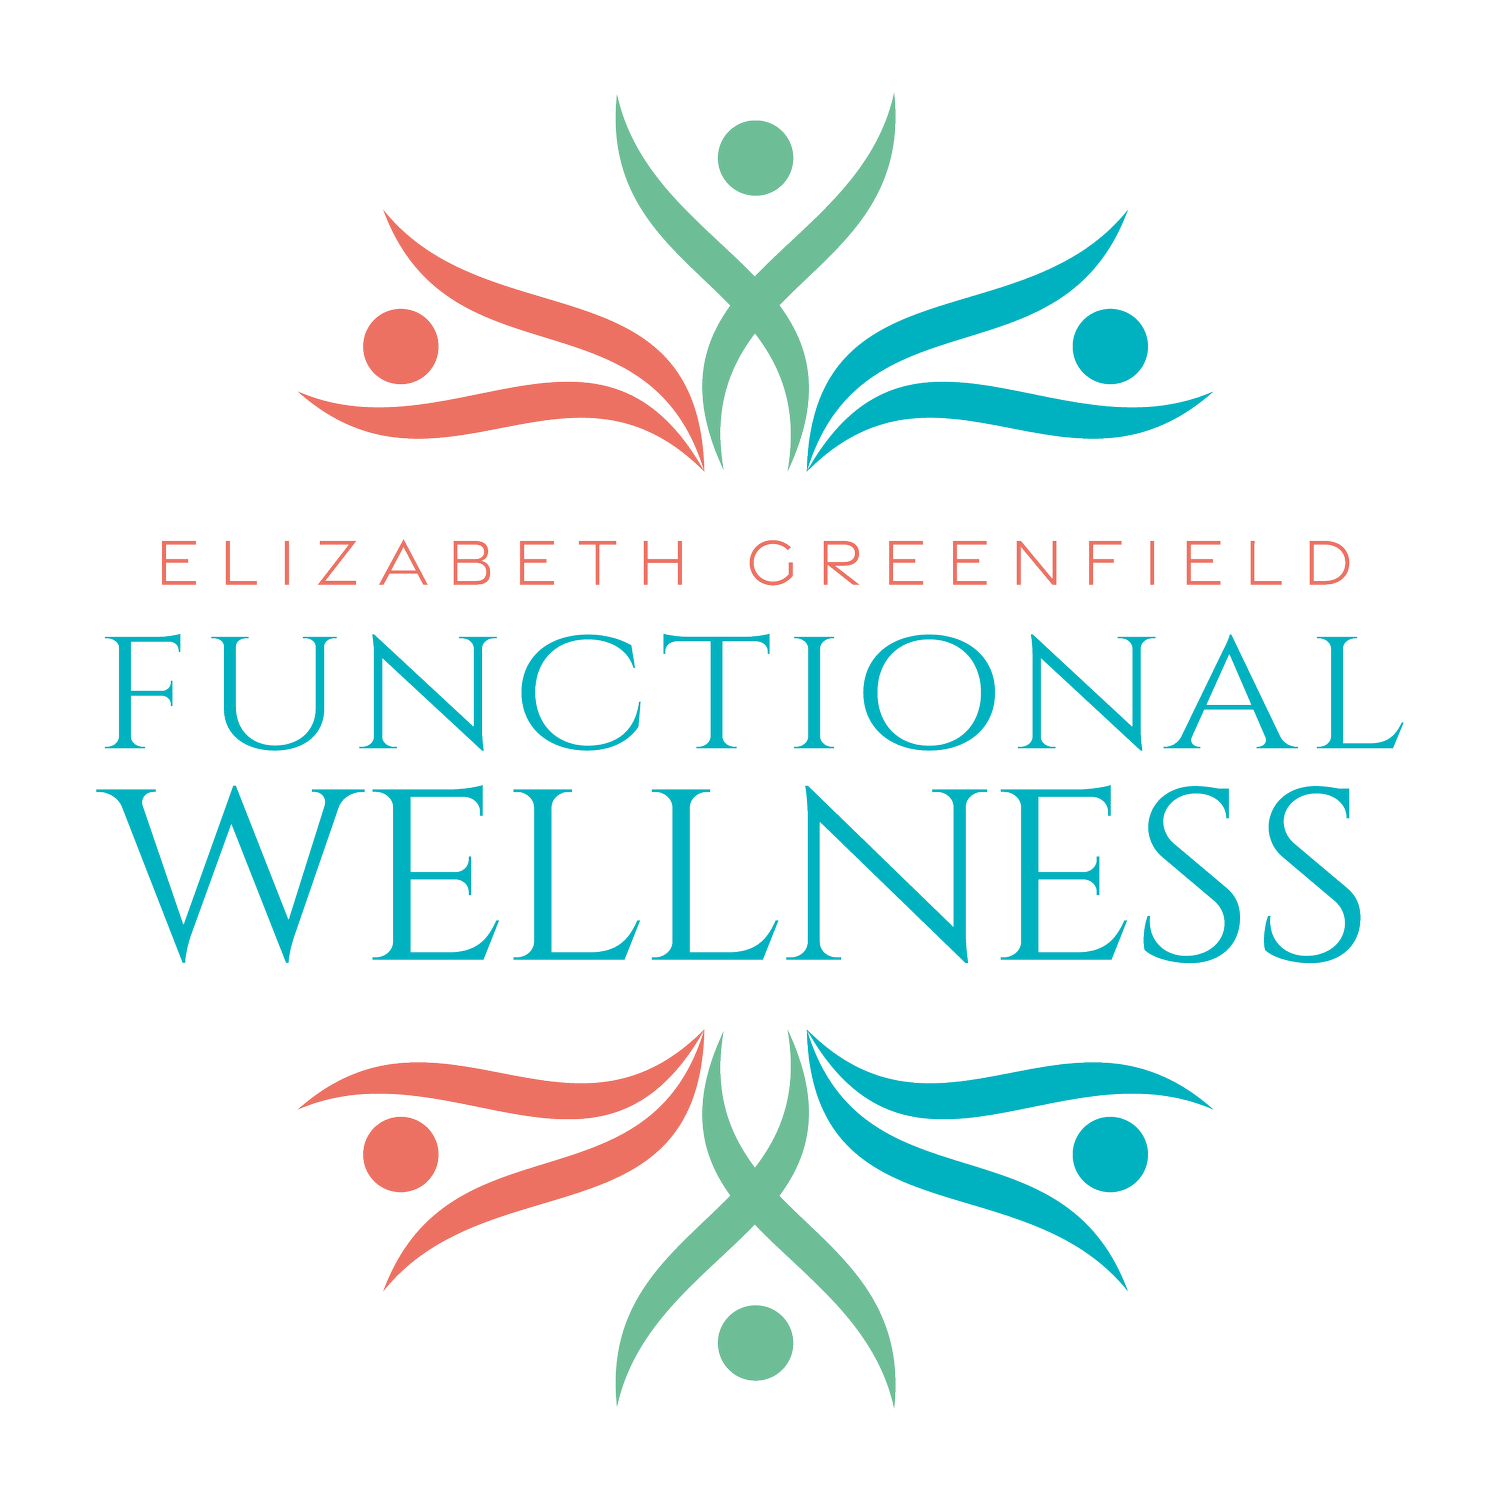  Elizabeth Greenfield Functional Wellness